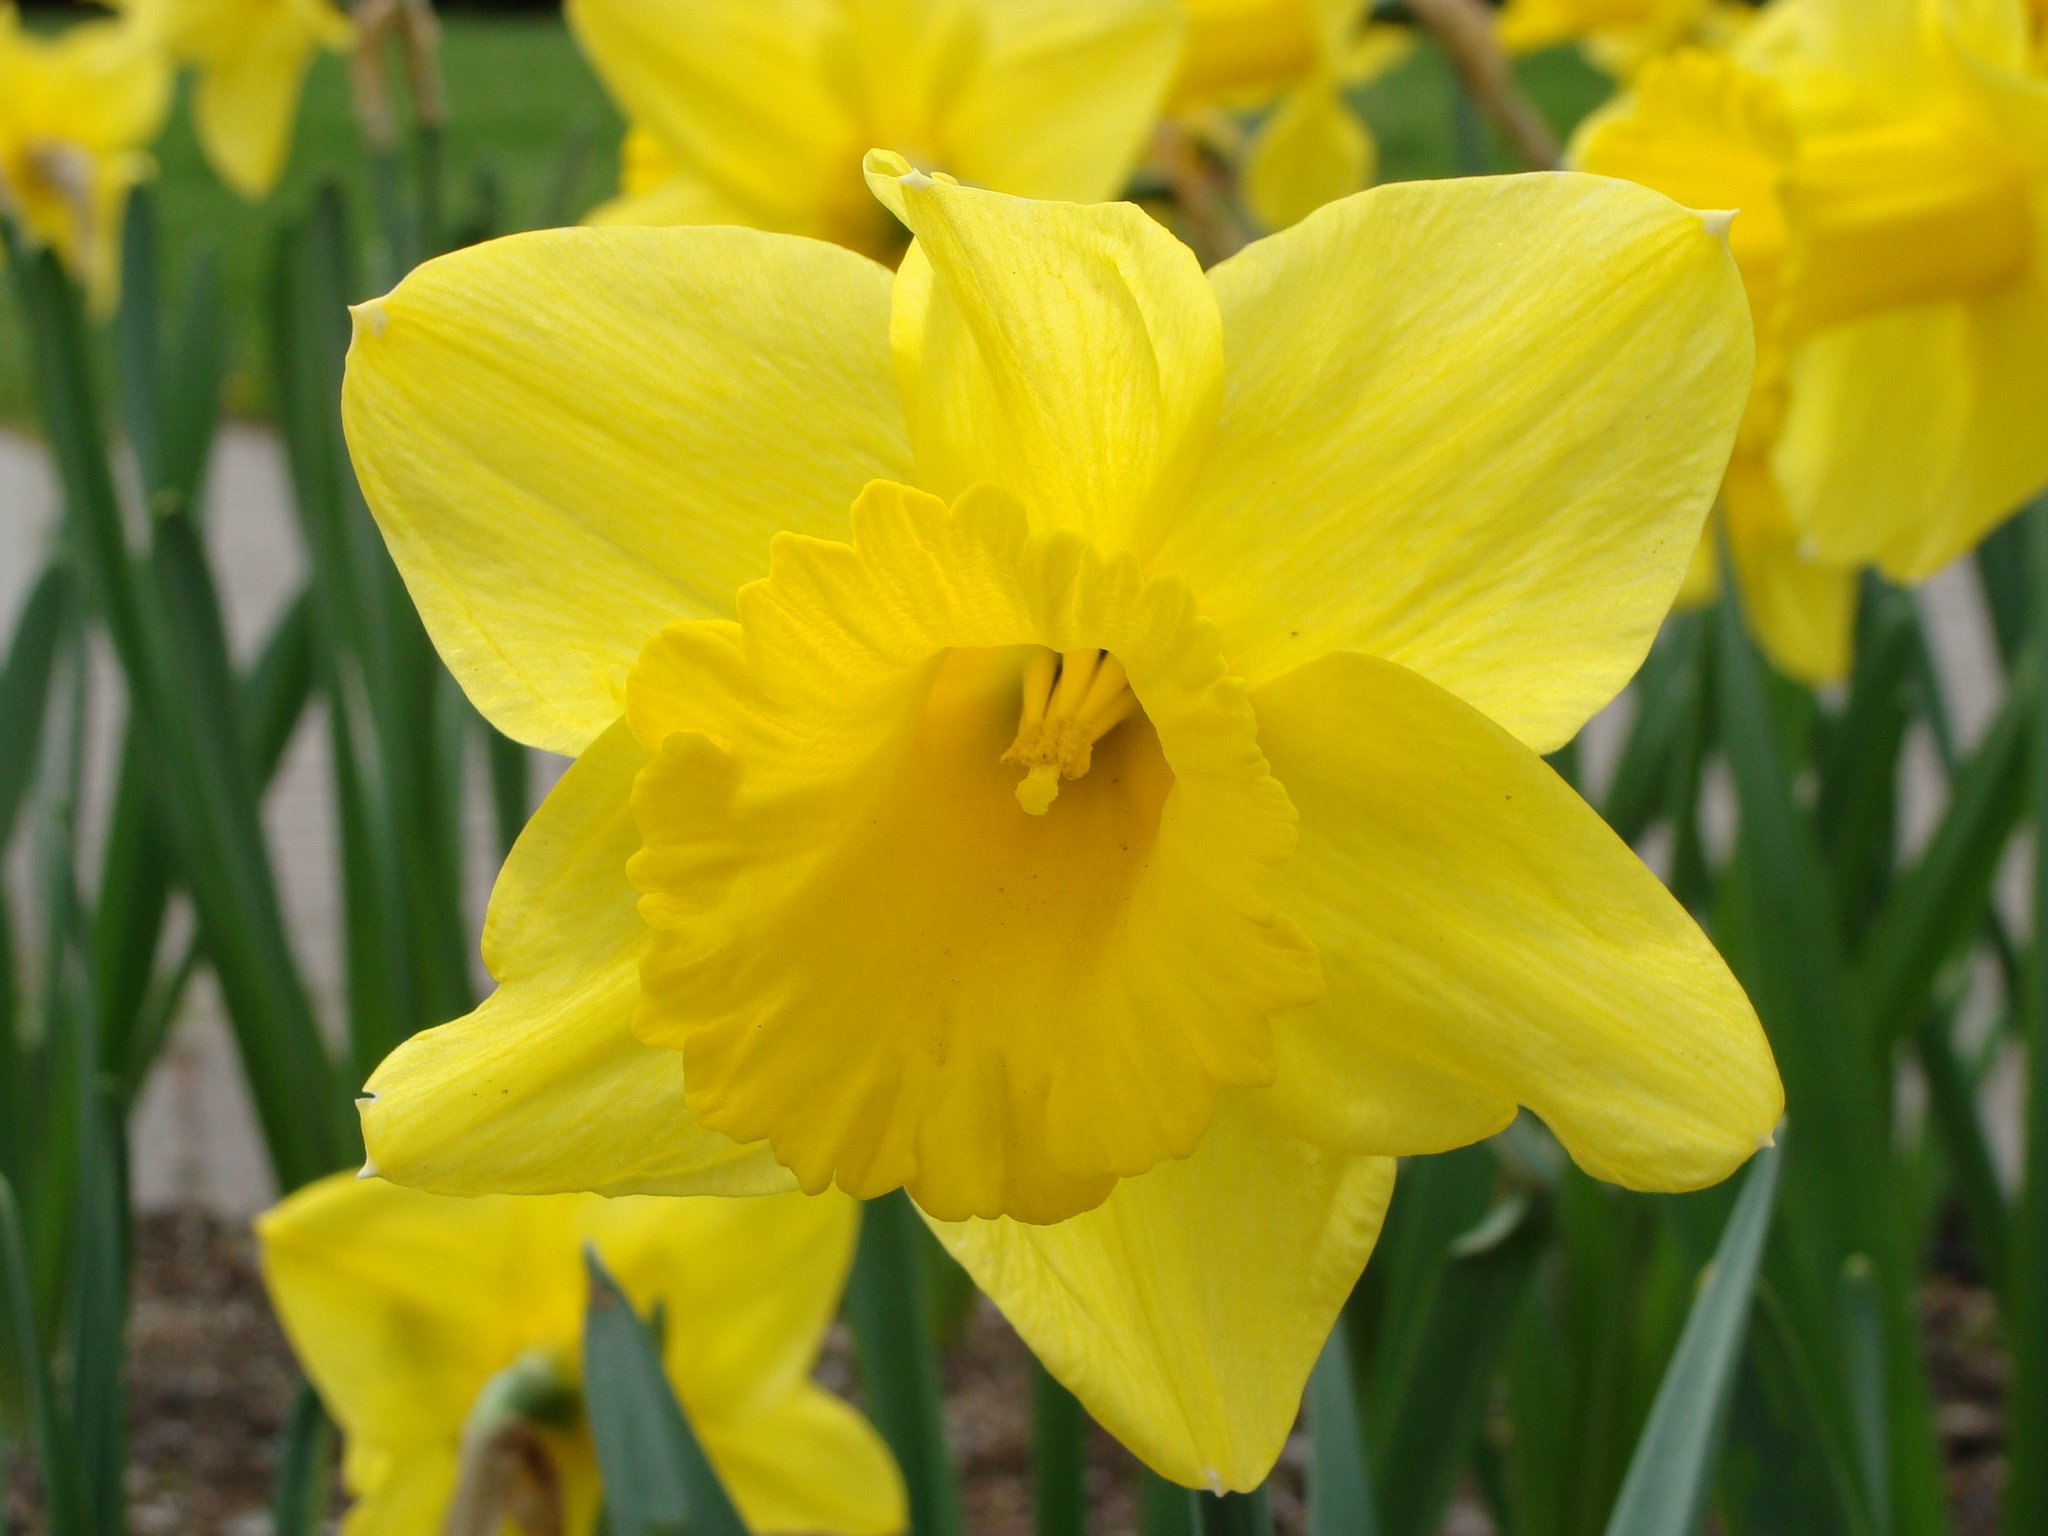 Yellow Narcissus flower by Alinamlina on DeviantArt